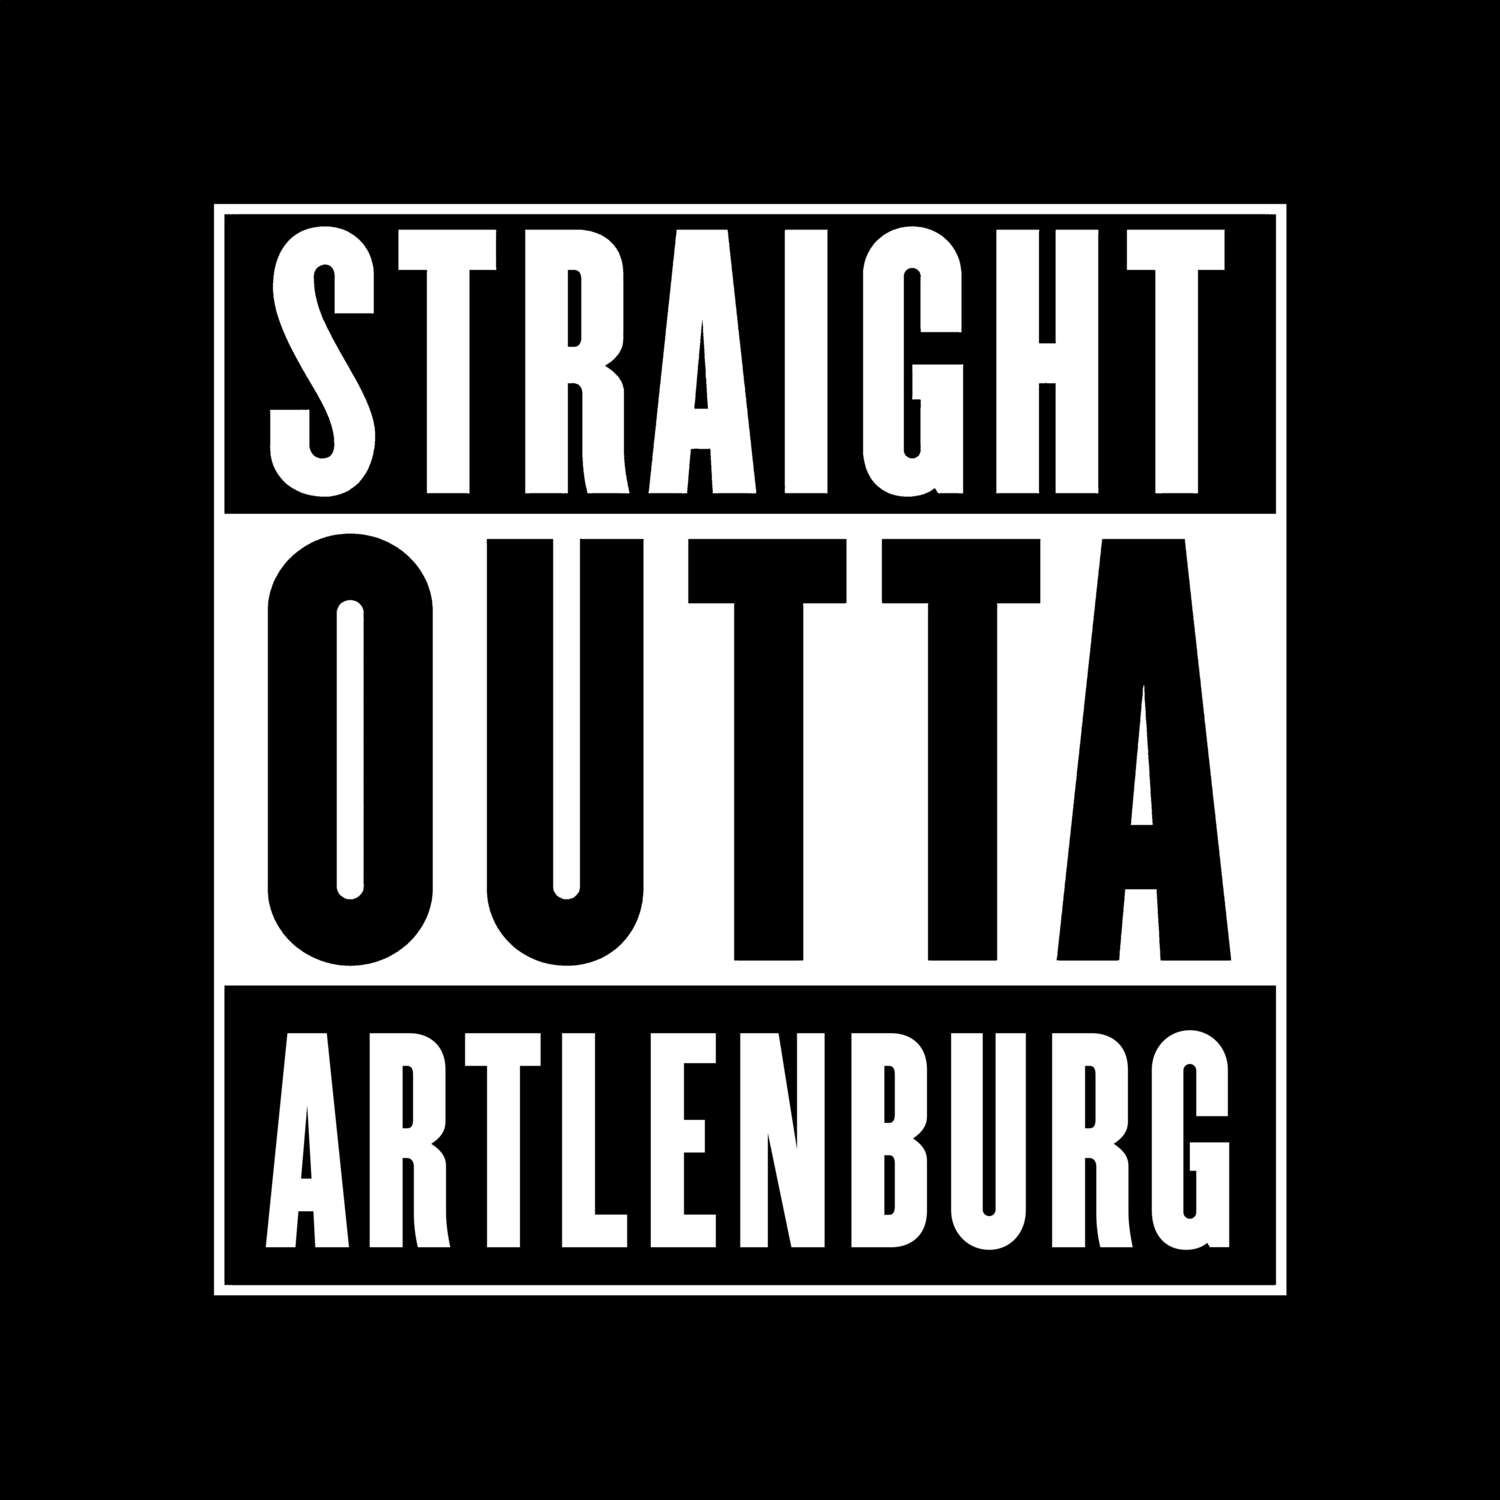 Artlenburg T-Shirt »Straight Outta«